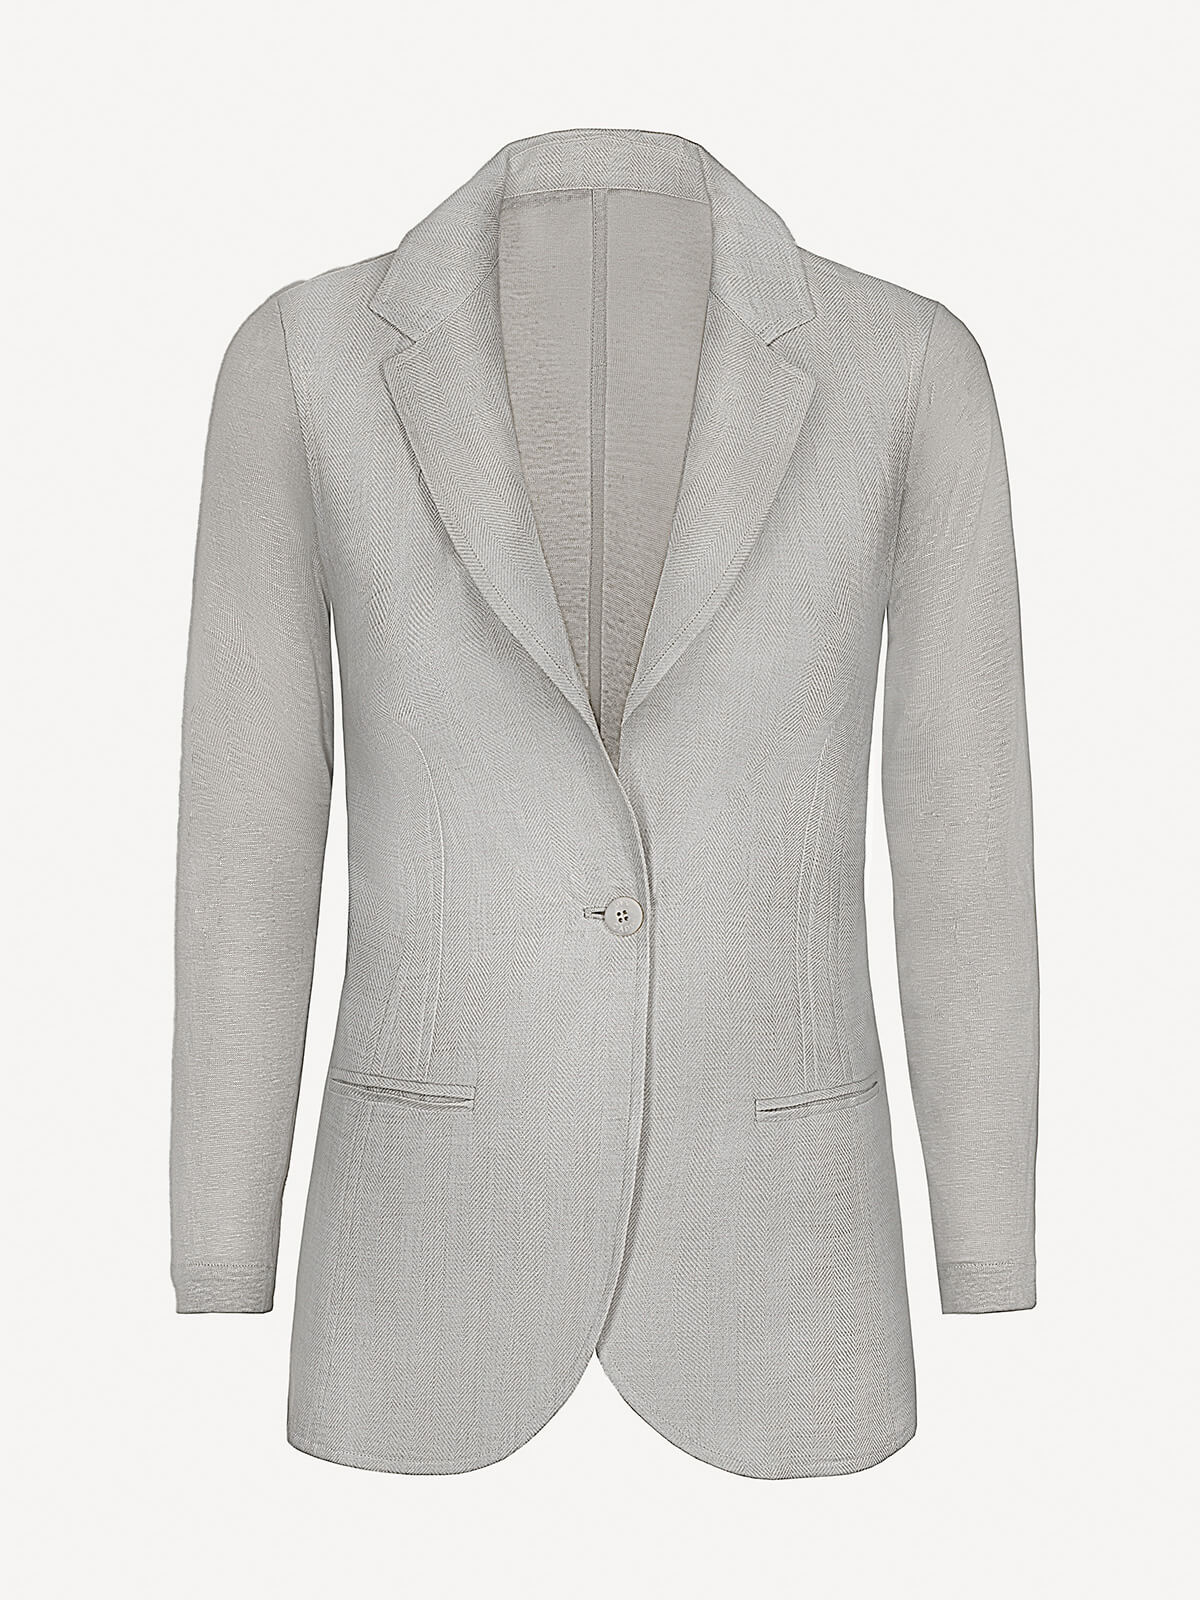 Giacca Sud Woman 100% Capri light grey linen jacket front